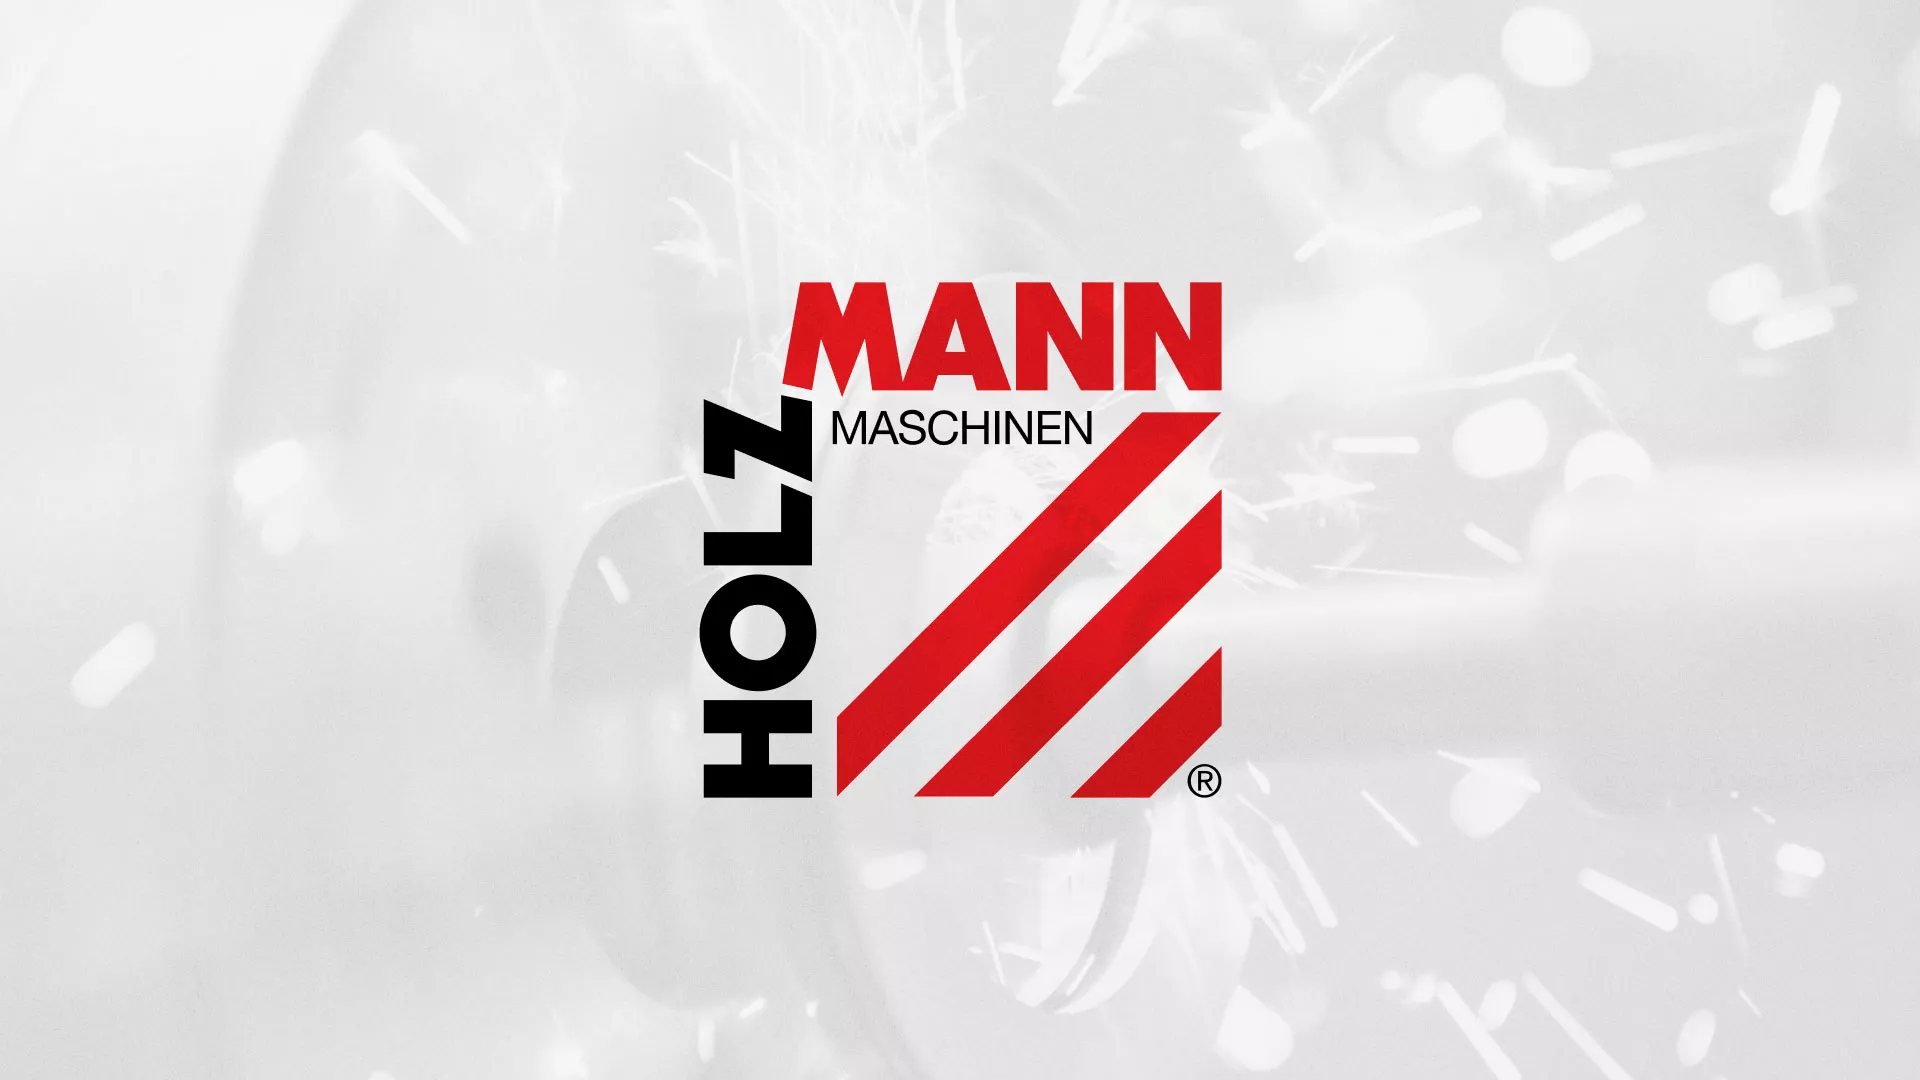 Создание сайта компании «HOLZMANN Maschinen GmbH» в Грязях